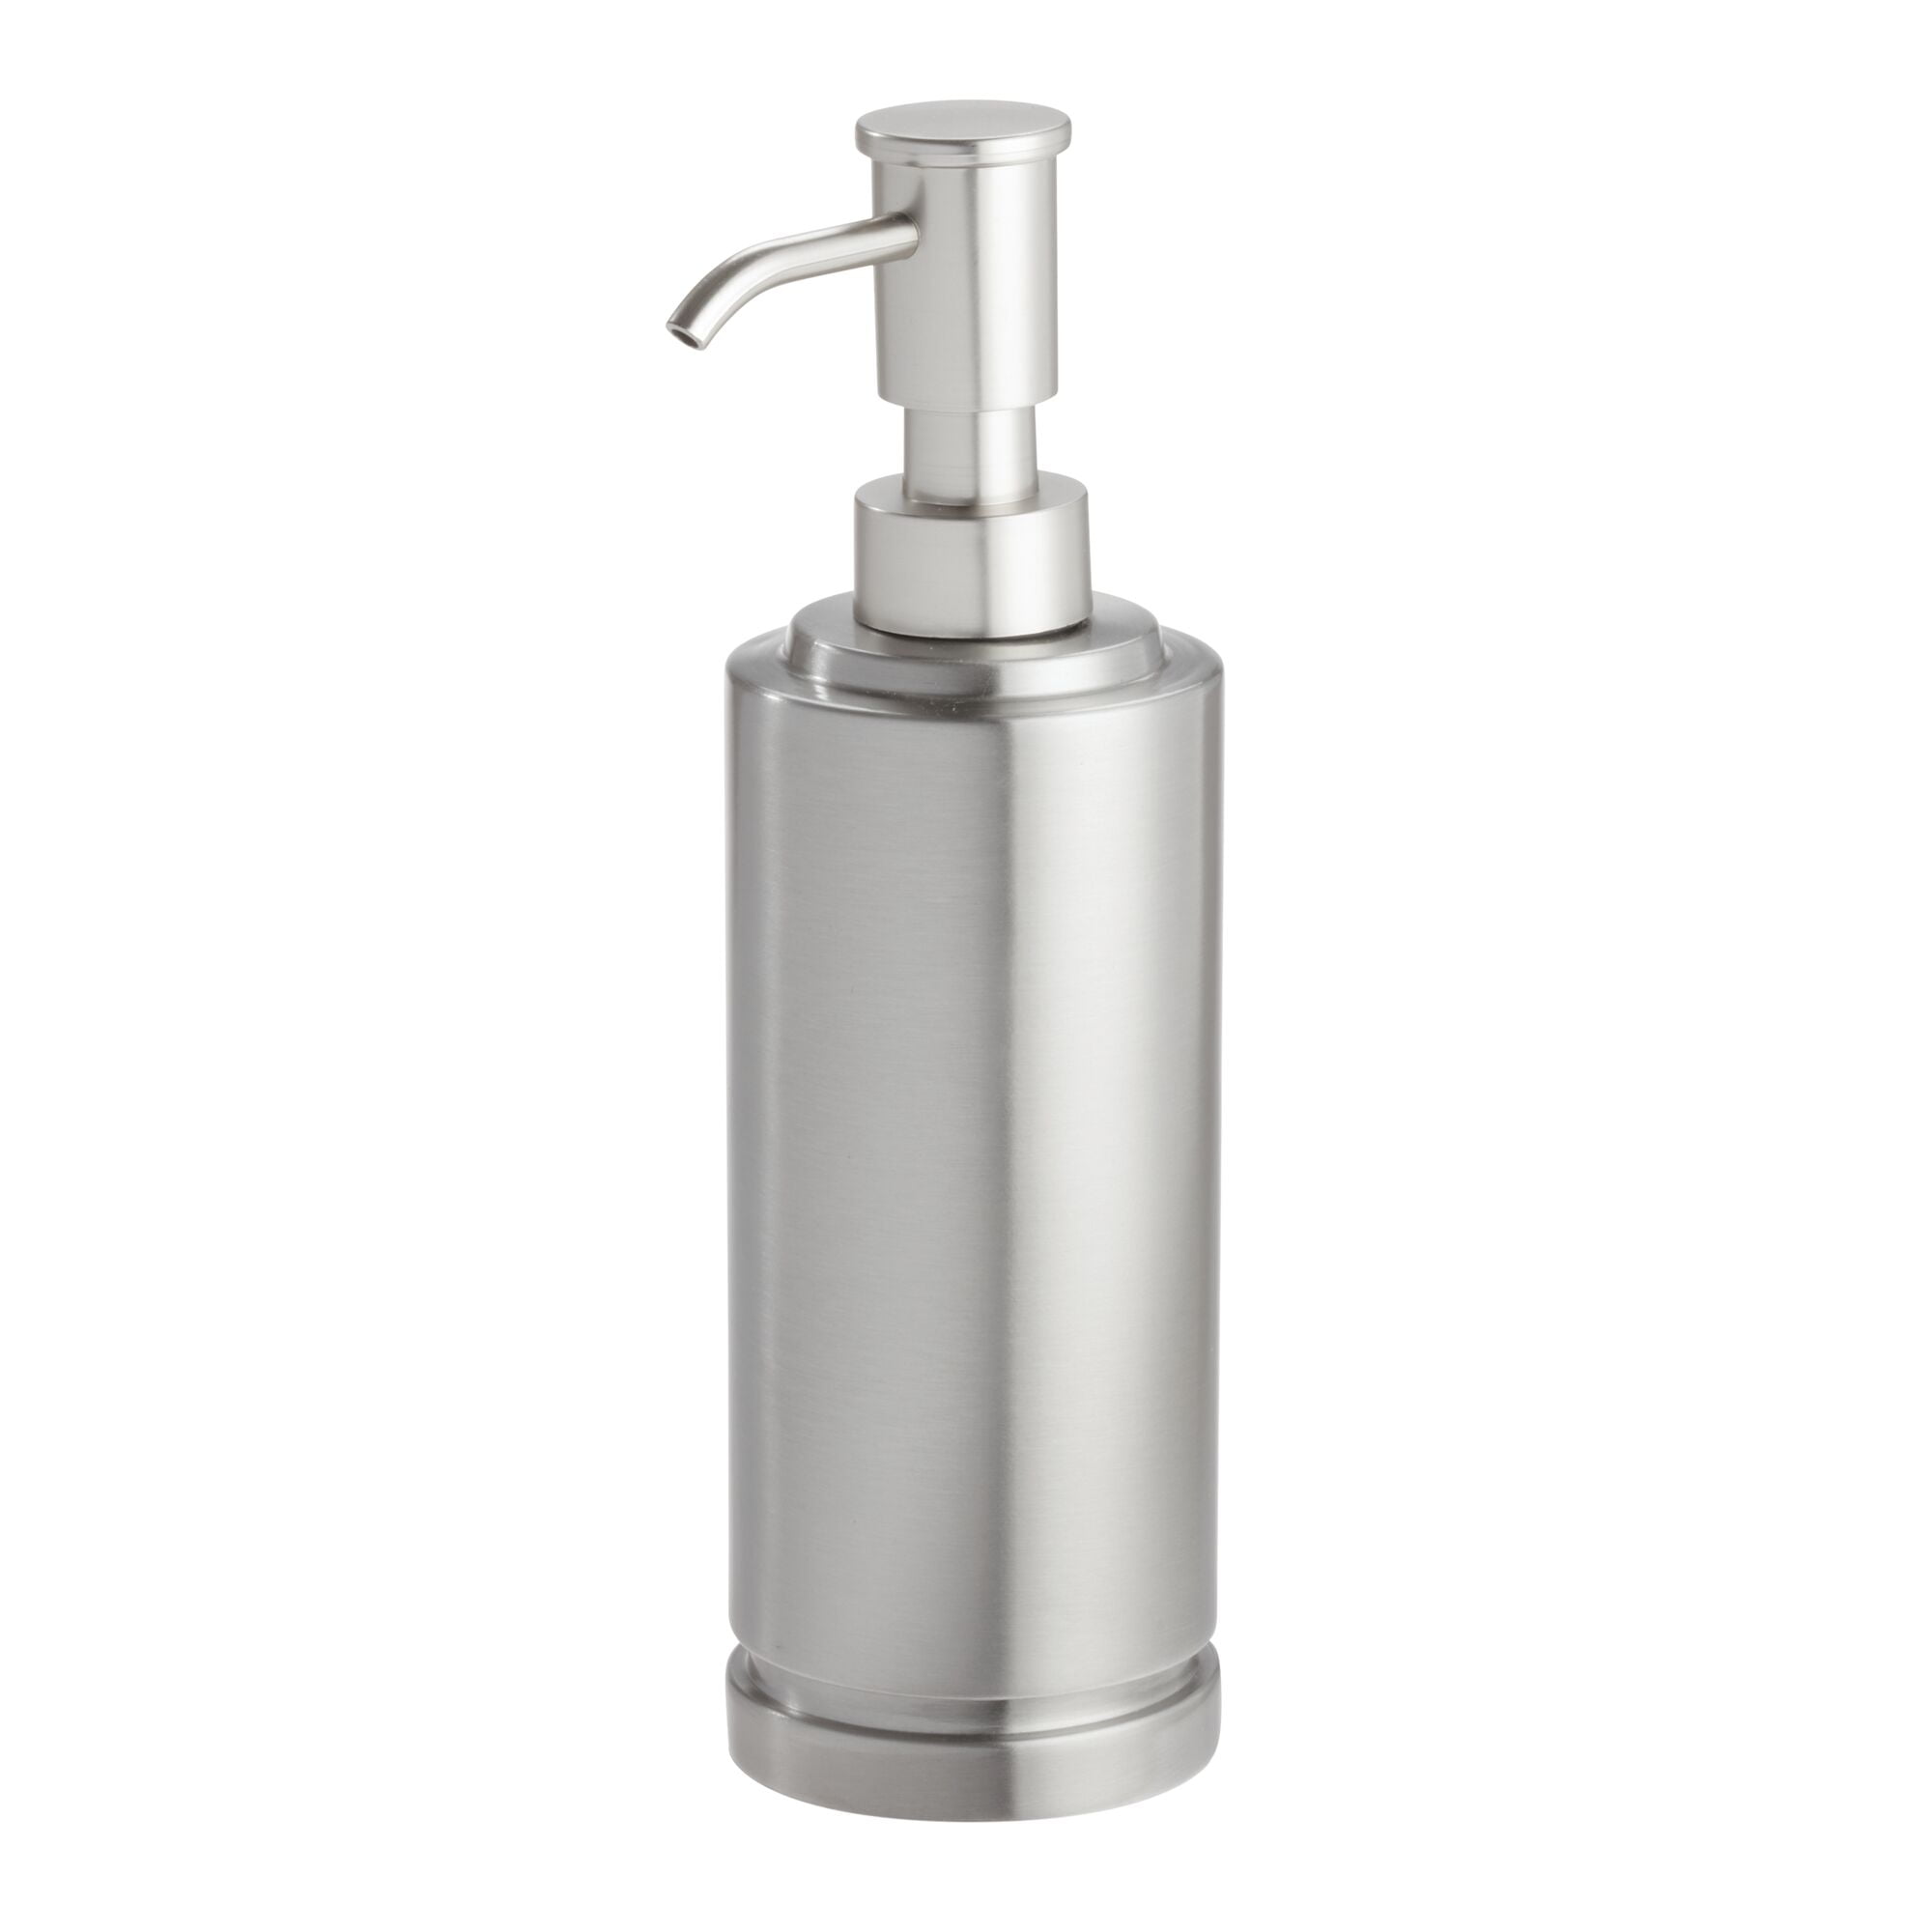 Bathroom Soap Dispenser Bath Bottle Brushed Nickel Stainless Steel Free Standing 